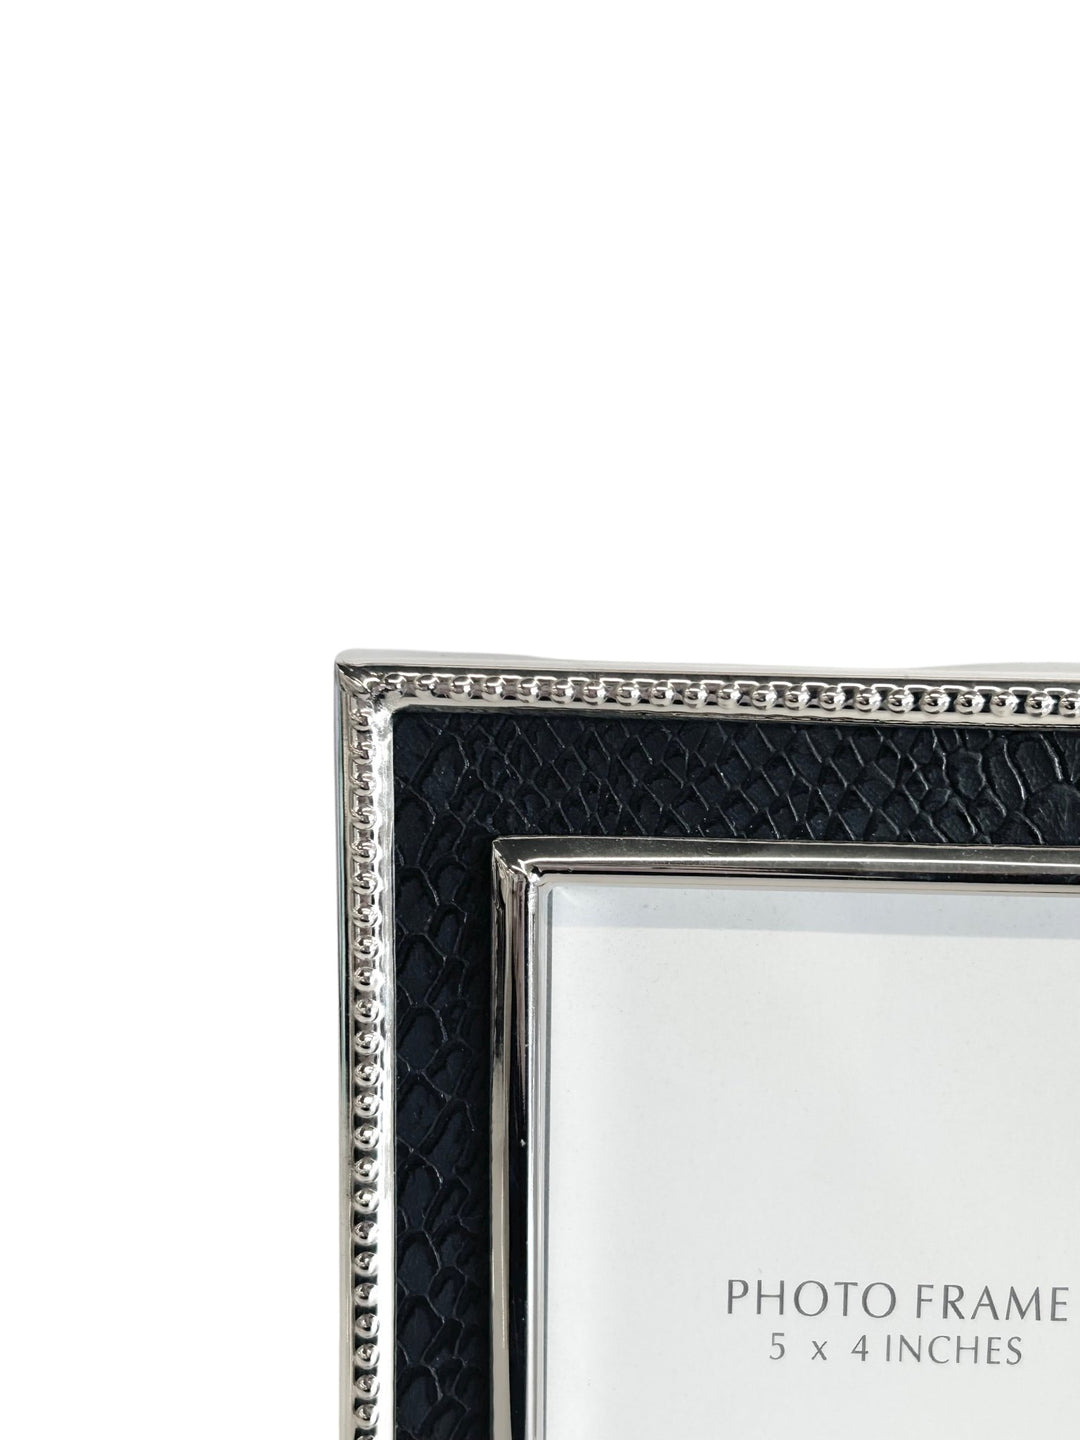 Bk Leather Frame W/ Silver Trim - 4 X 5 - #Perch#